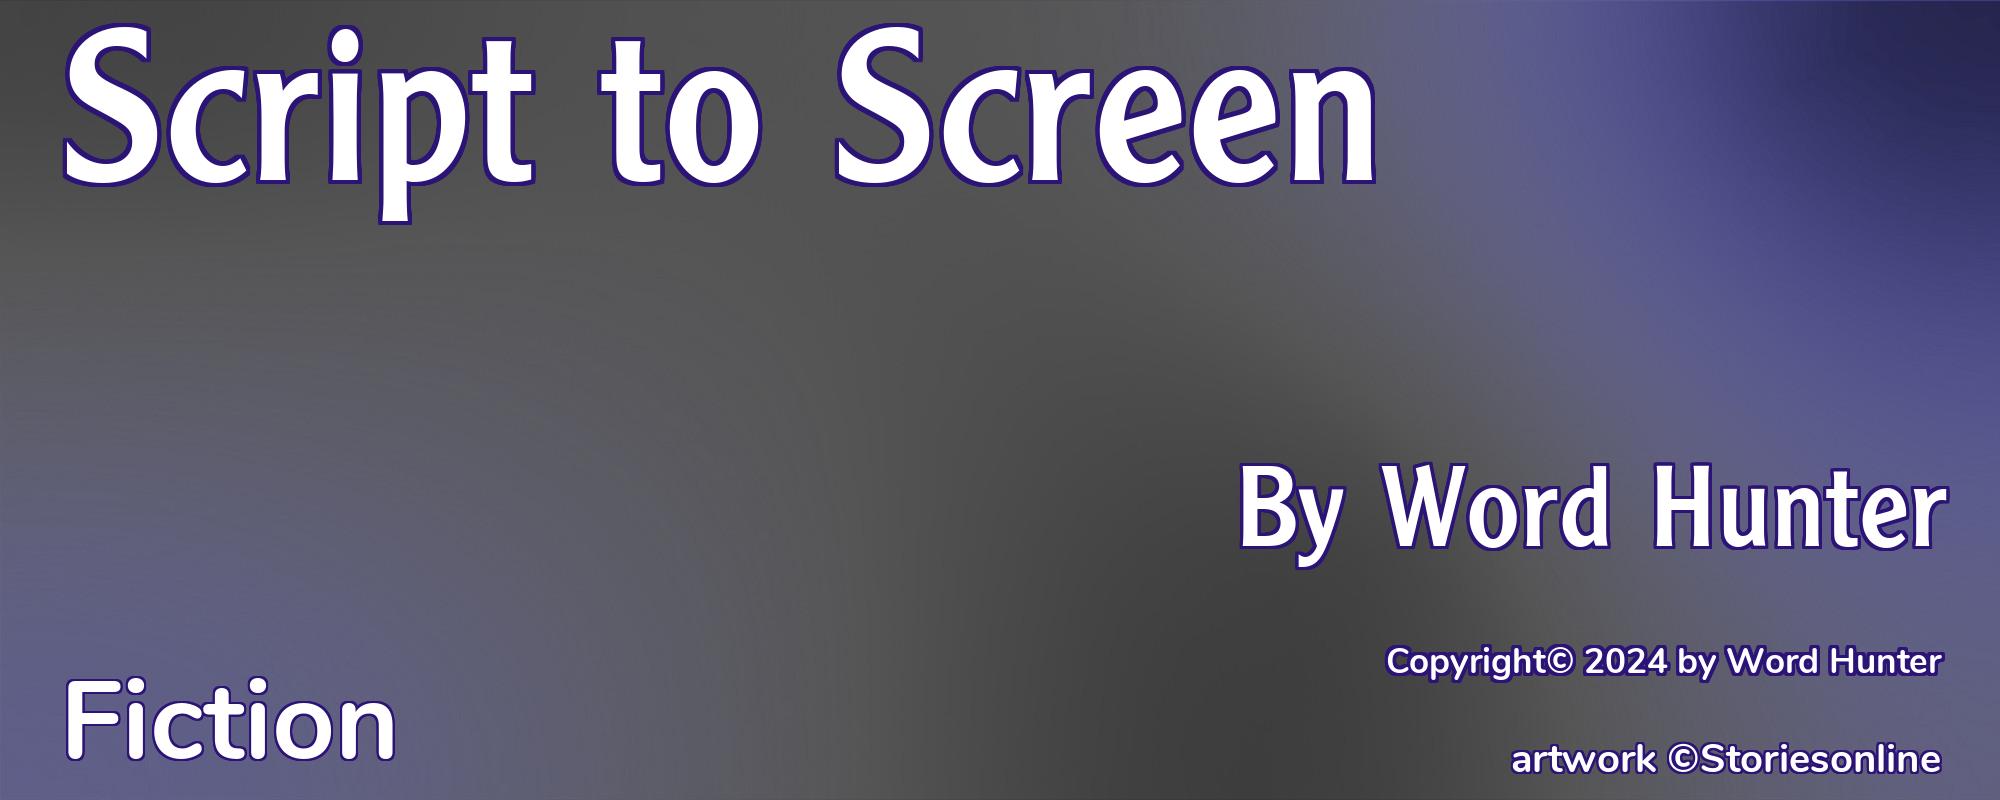 Script to Screen - Cover